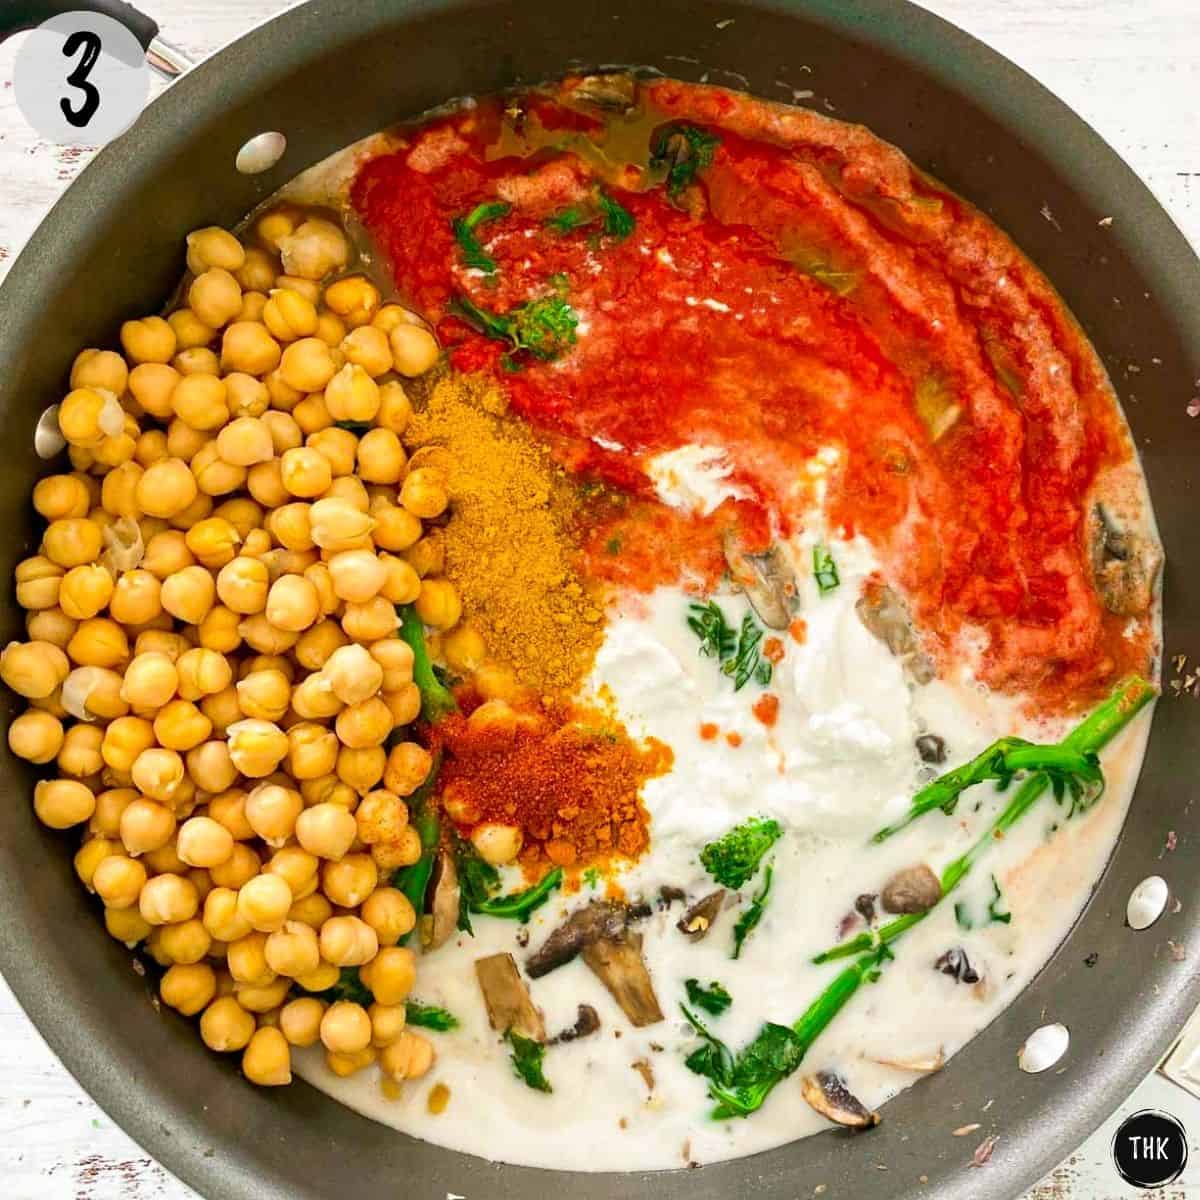 Chickpeas, tomato sauce, curry powder, coconut milk, rapini and mushrooms inside deep pan.